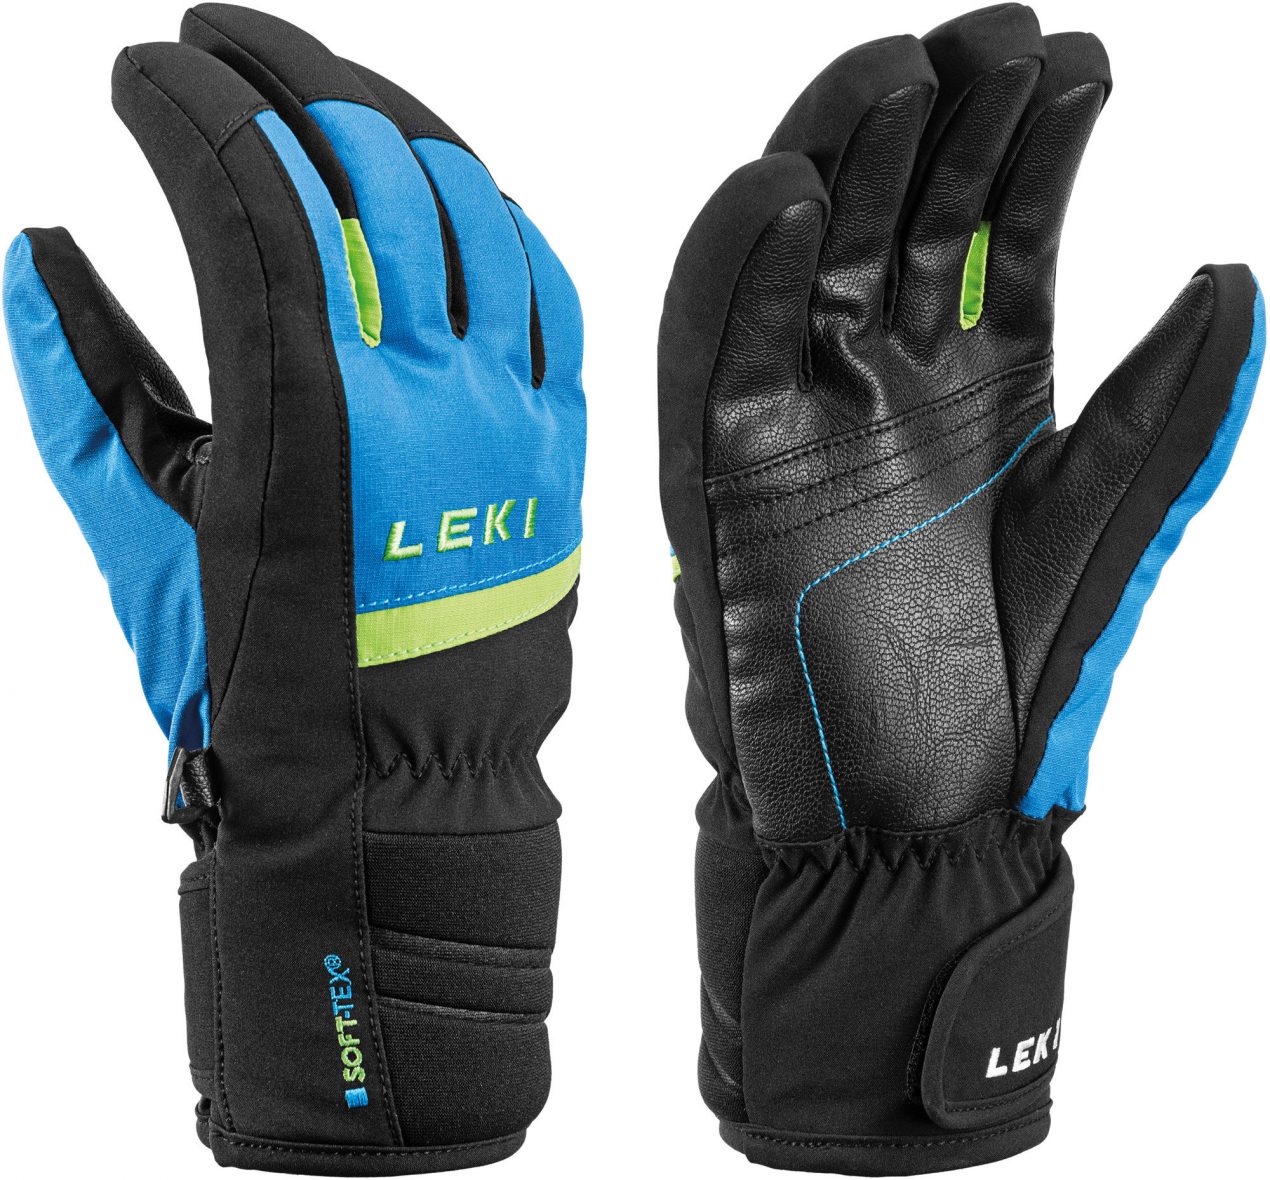 Leki Max Junior Gloves 649807702 ktmart 2